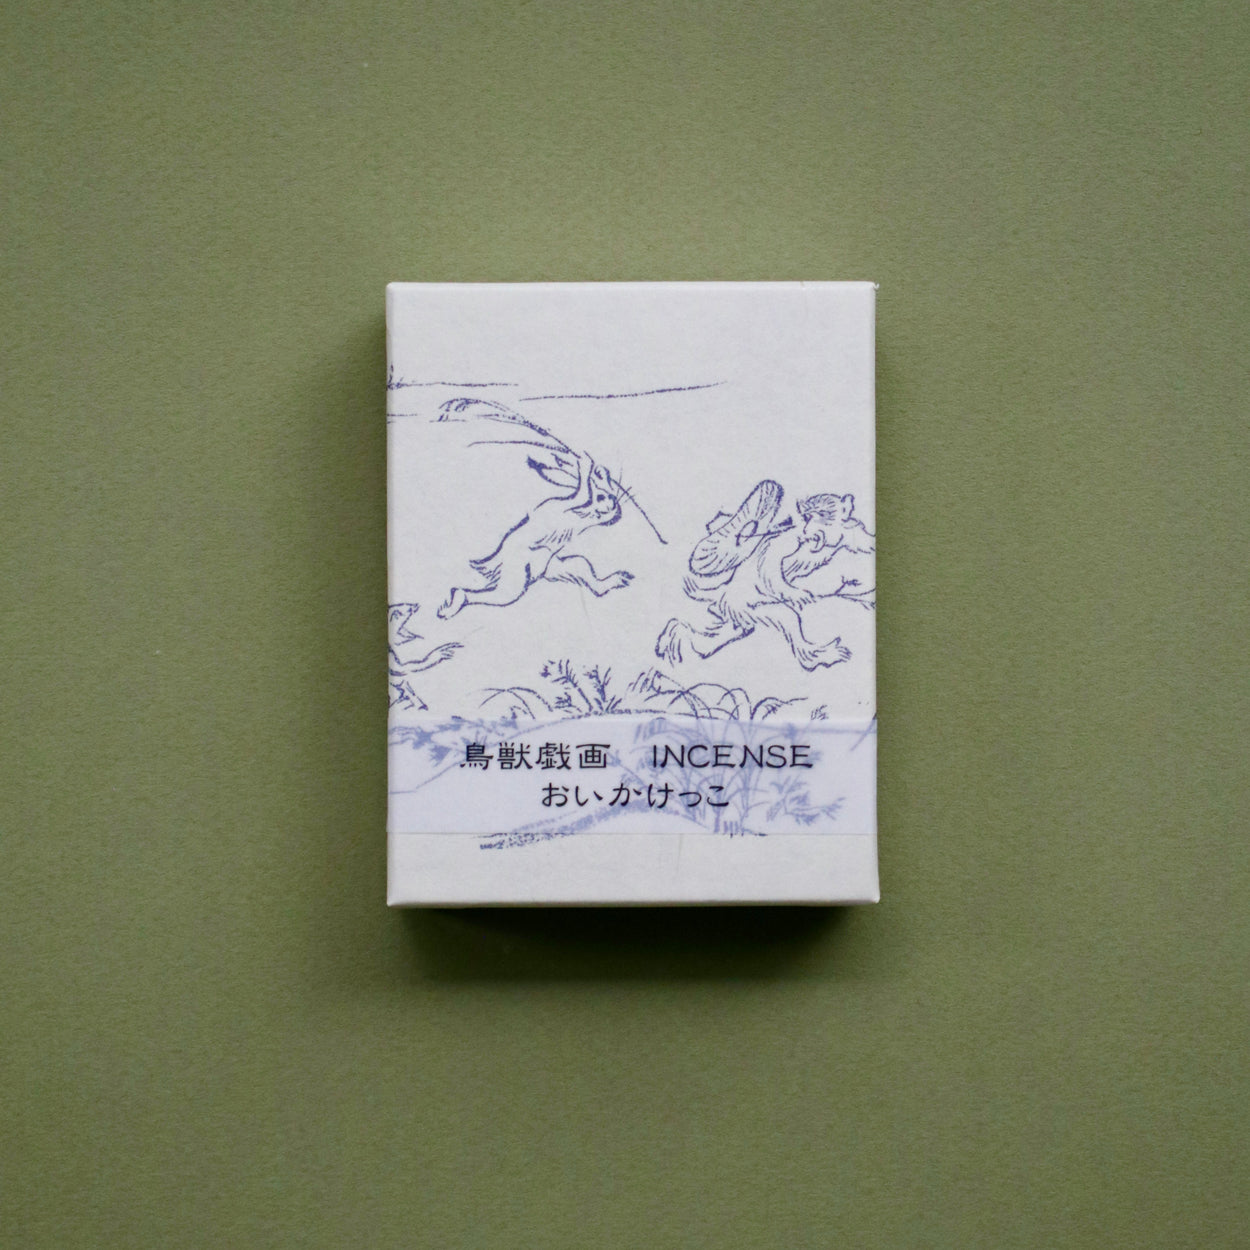 Japanese Incense Sticks - Catch box on green backdrop.